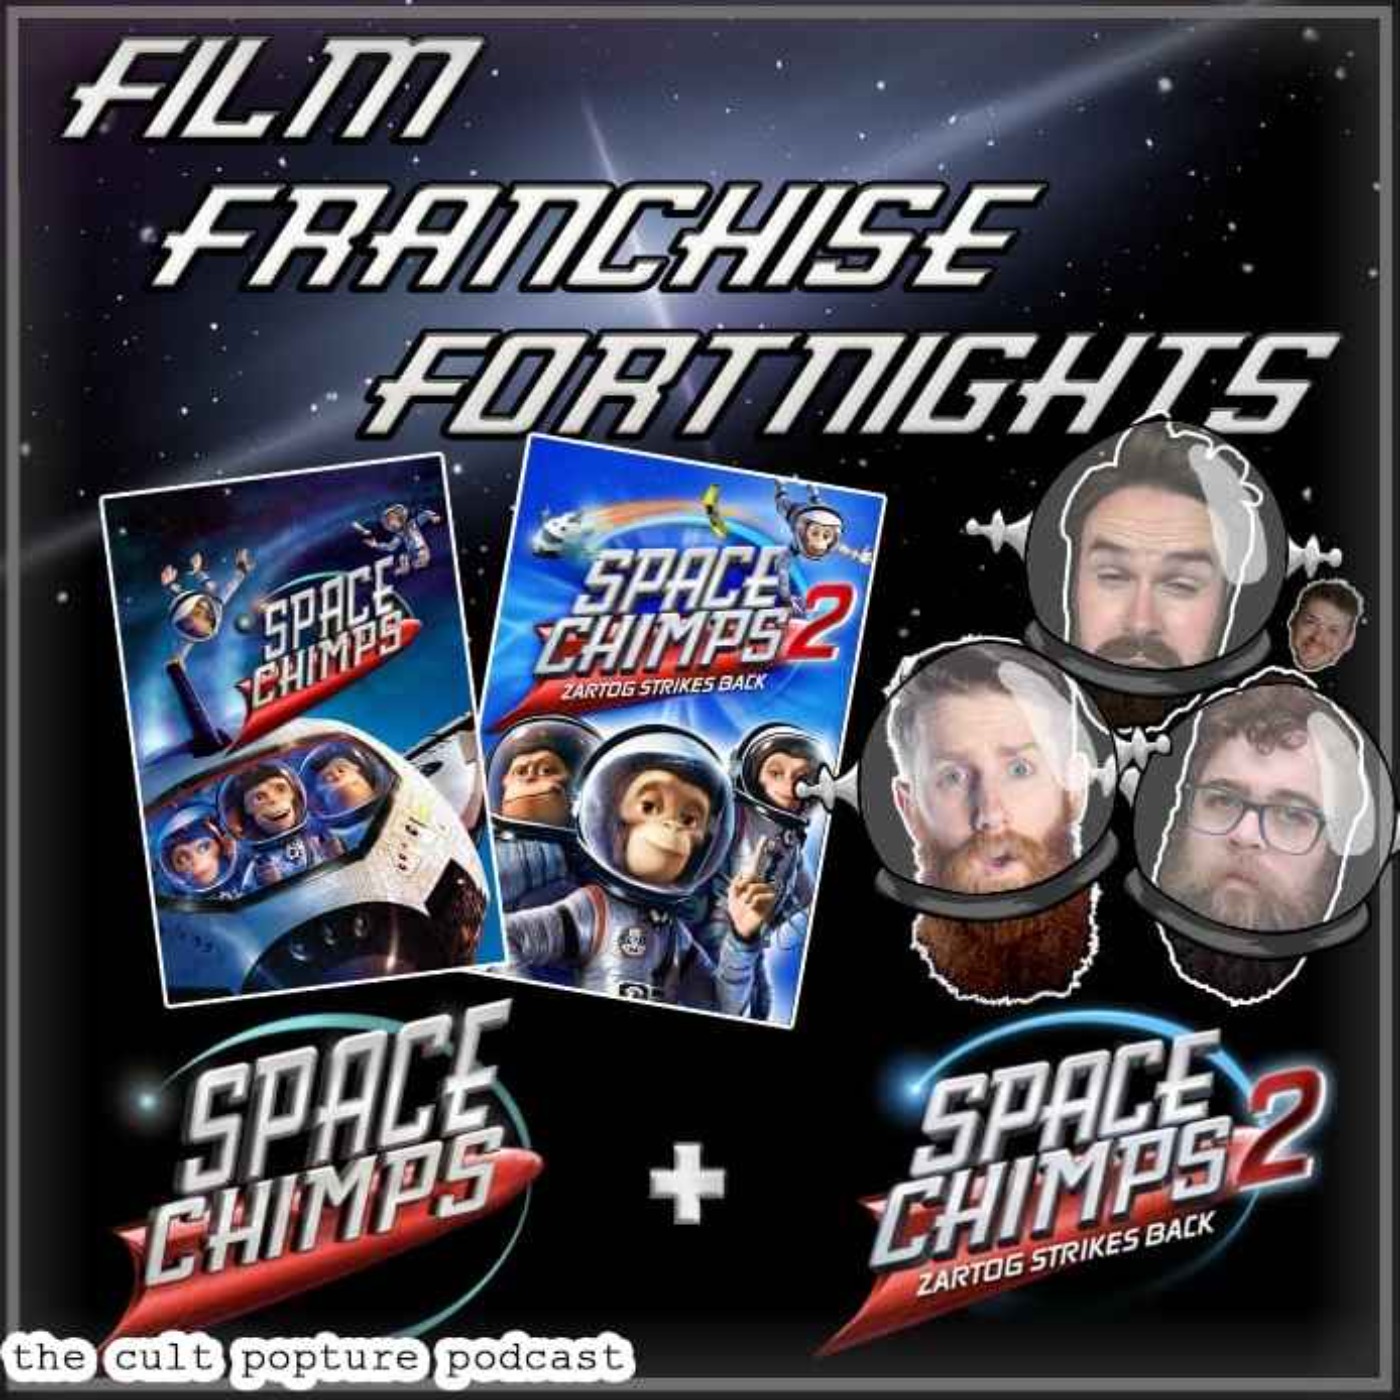 The ”Space Chimps” Series (ft. Matt Stewart) | Film Franchise Fortnights